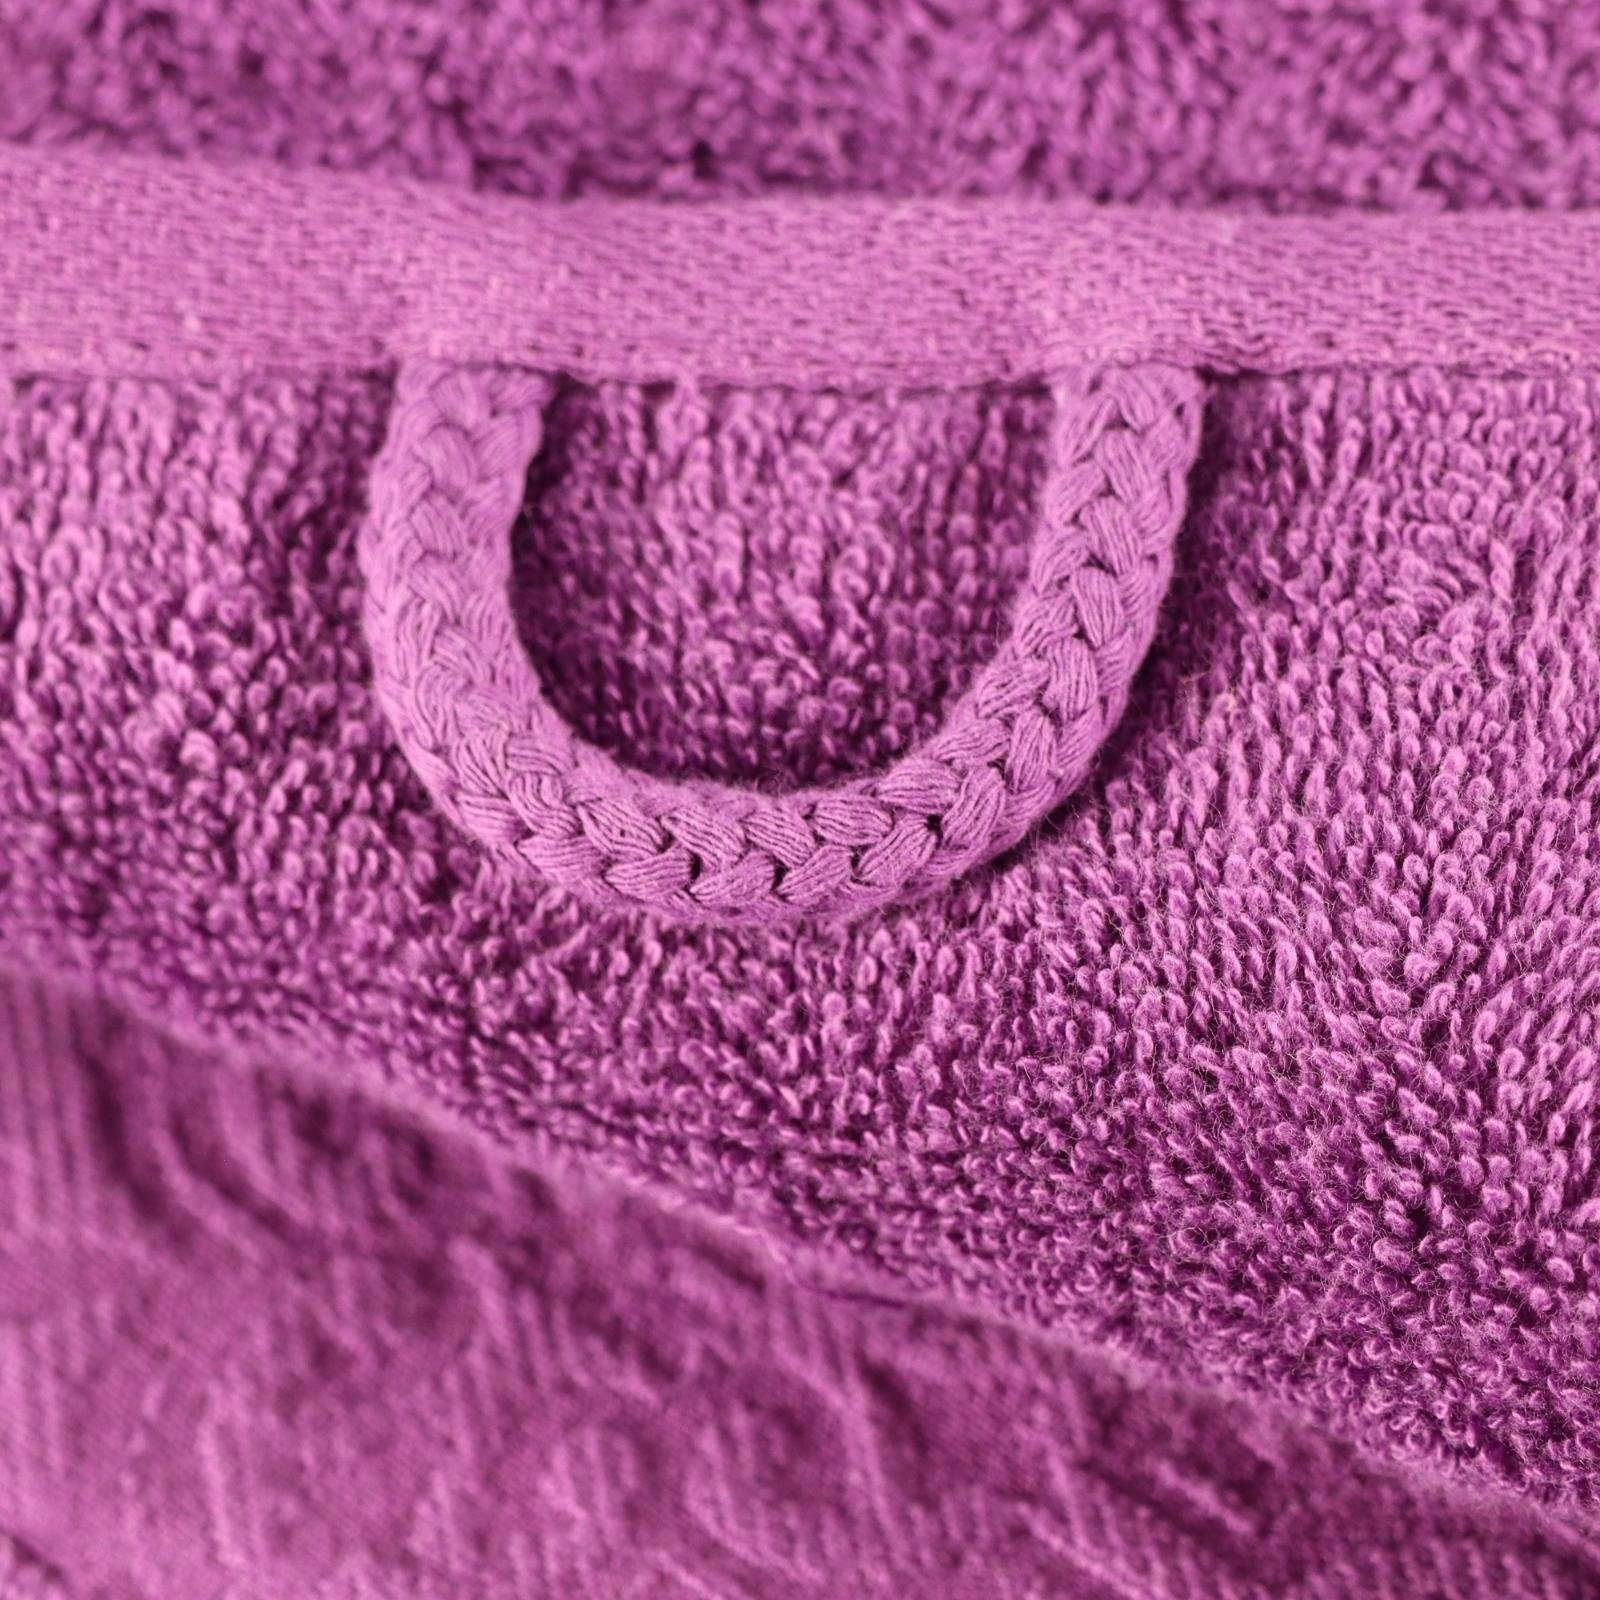 Plentyfy Handtücher Hand- &Duschtuch Set aus 100% Duschhandtuch Badetuch Set - 6tlg Frottee (6-St), - Baumwolle, Handtuch